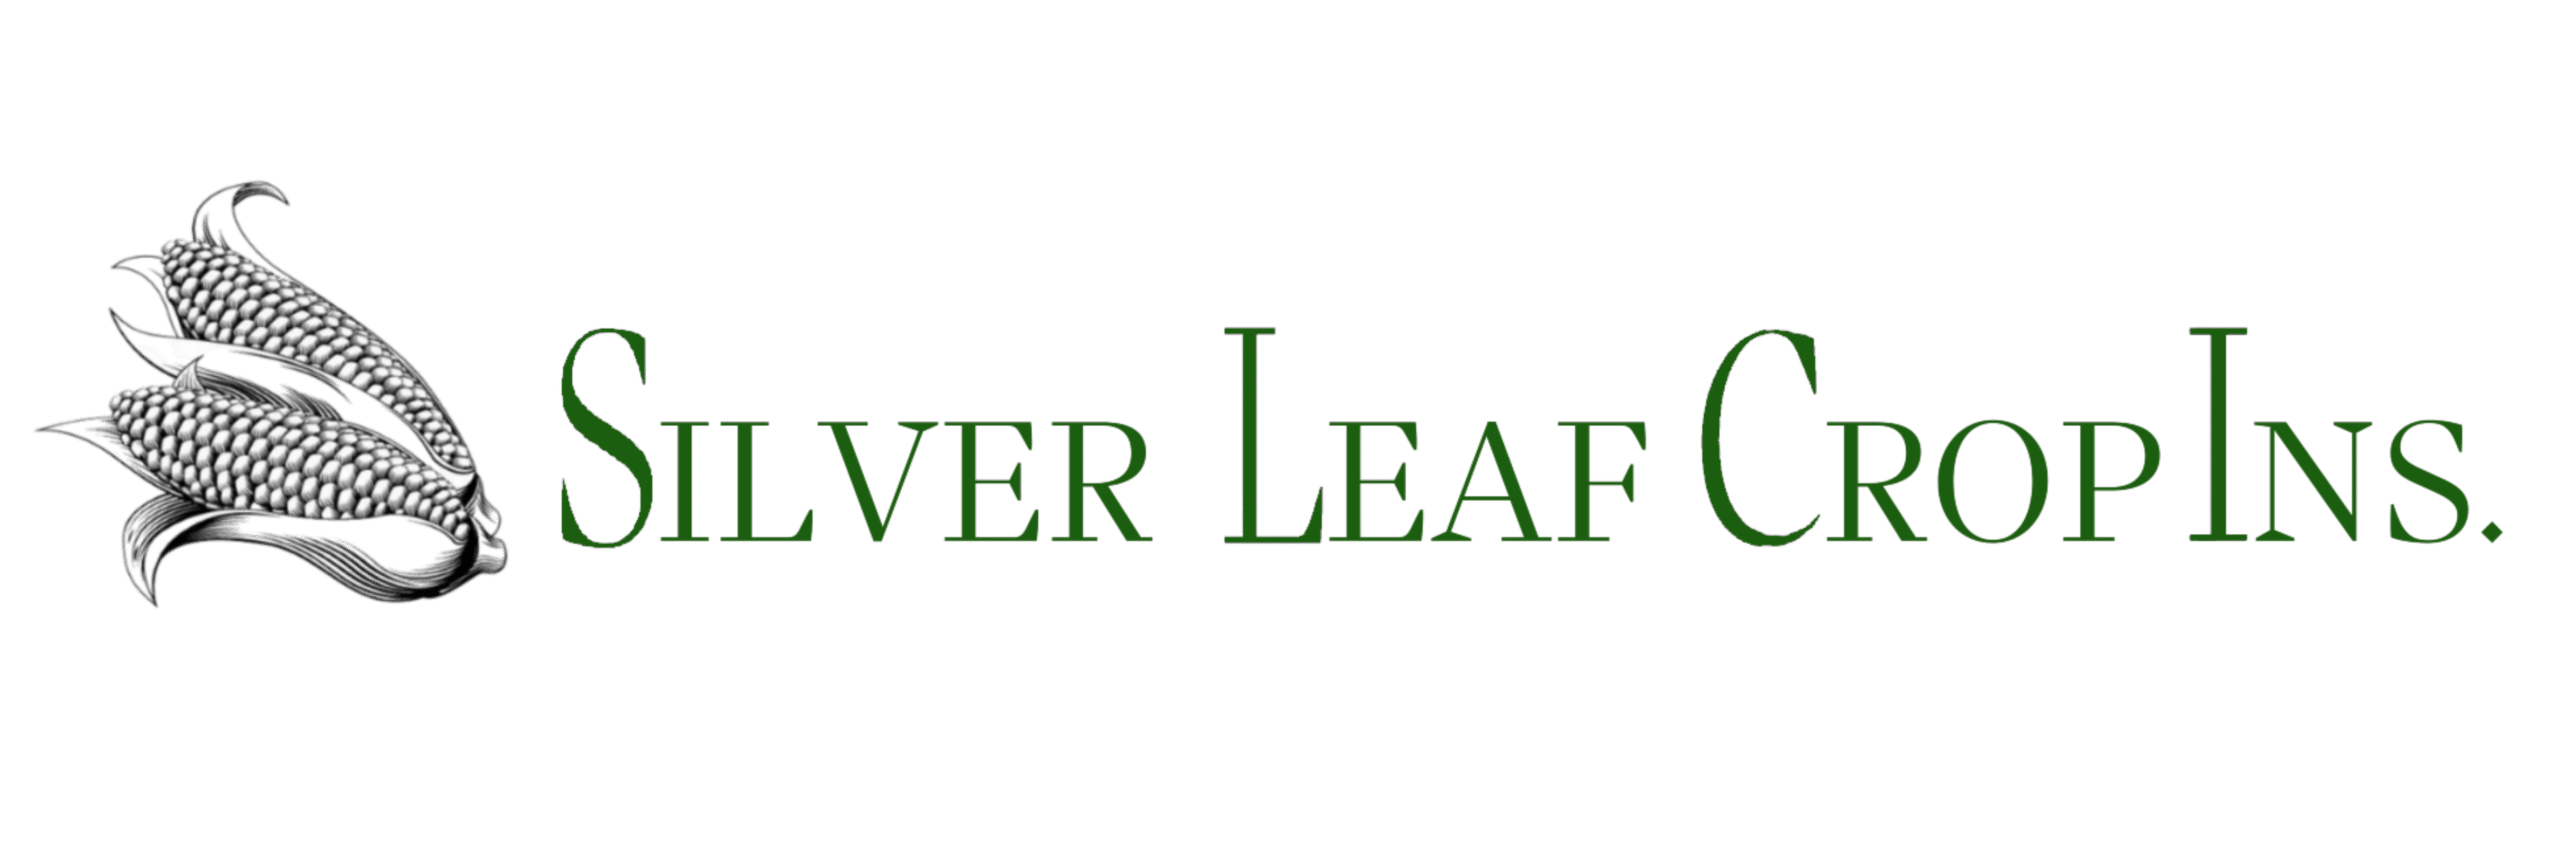 Silver Leaf Crop Insurance